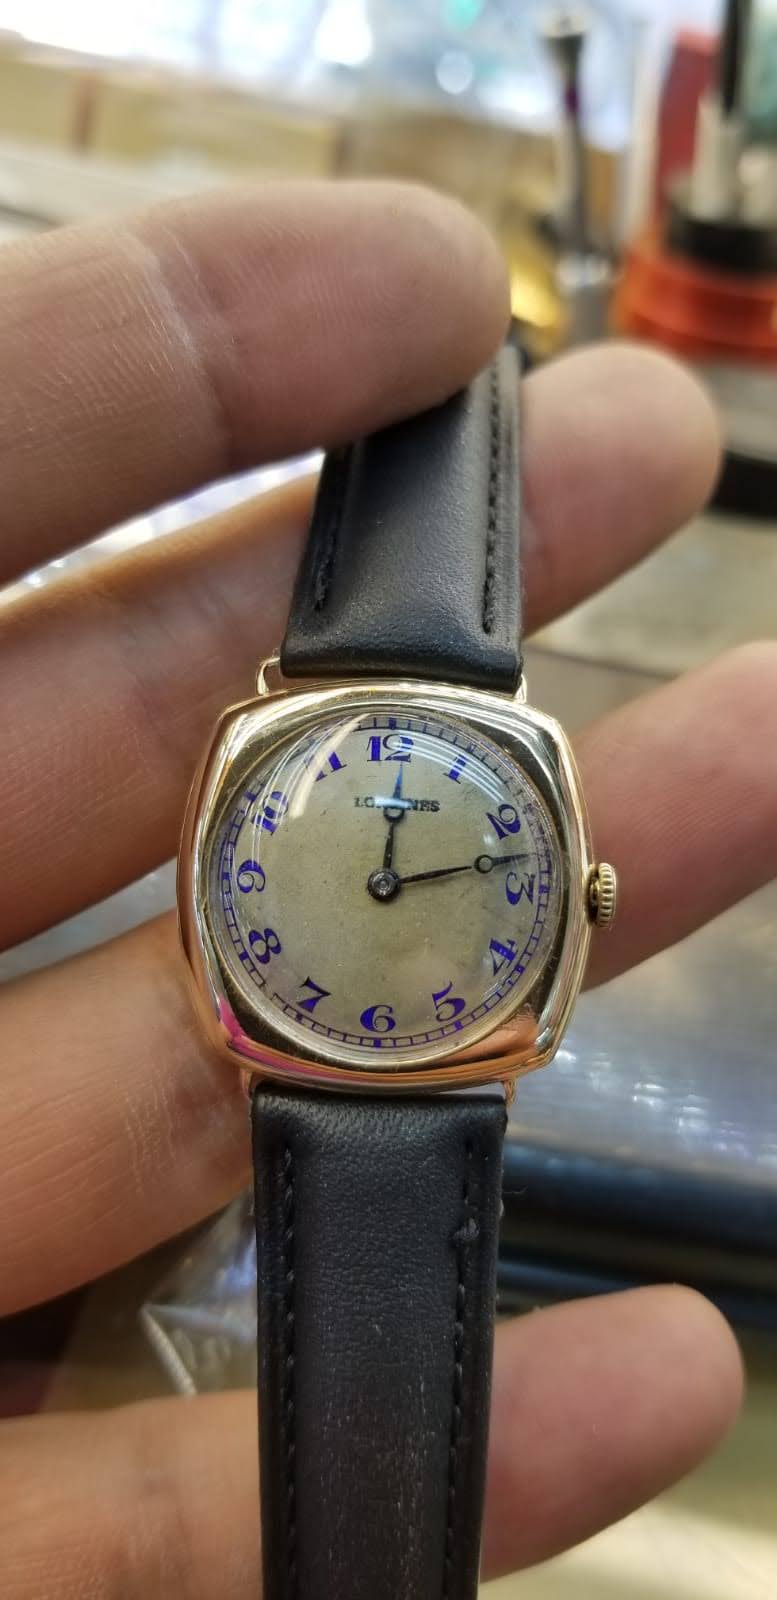 Longines - Pre-1920's Skeleton Wristwatch – Every Watch Has a Story